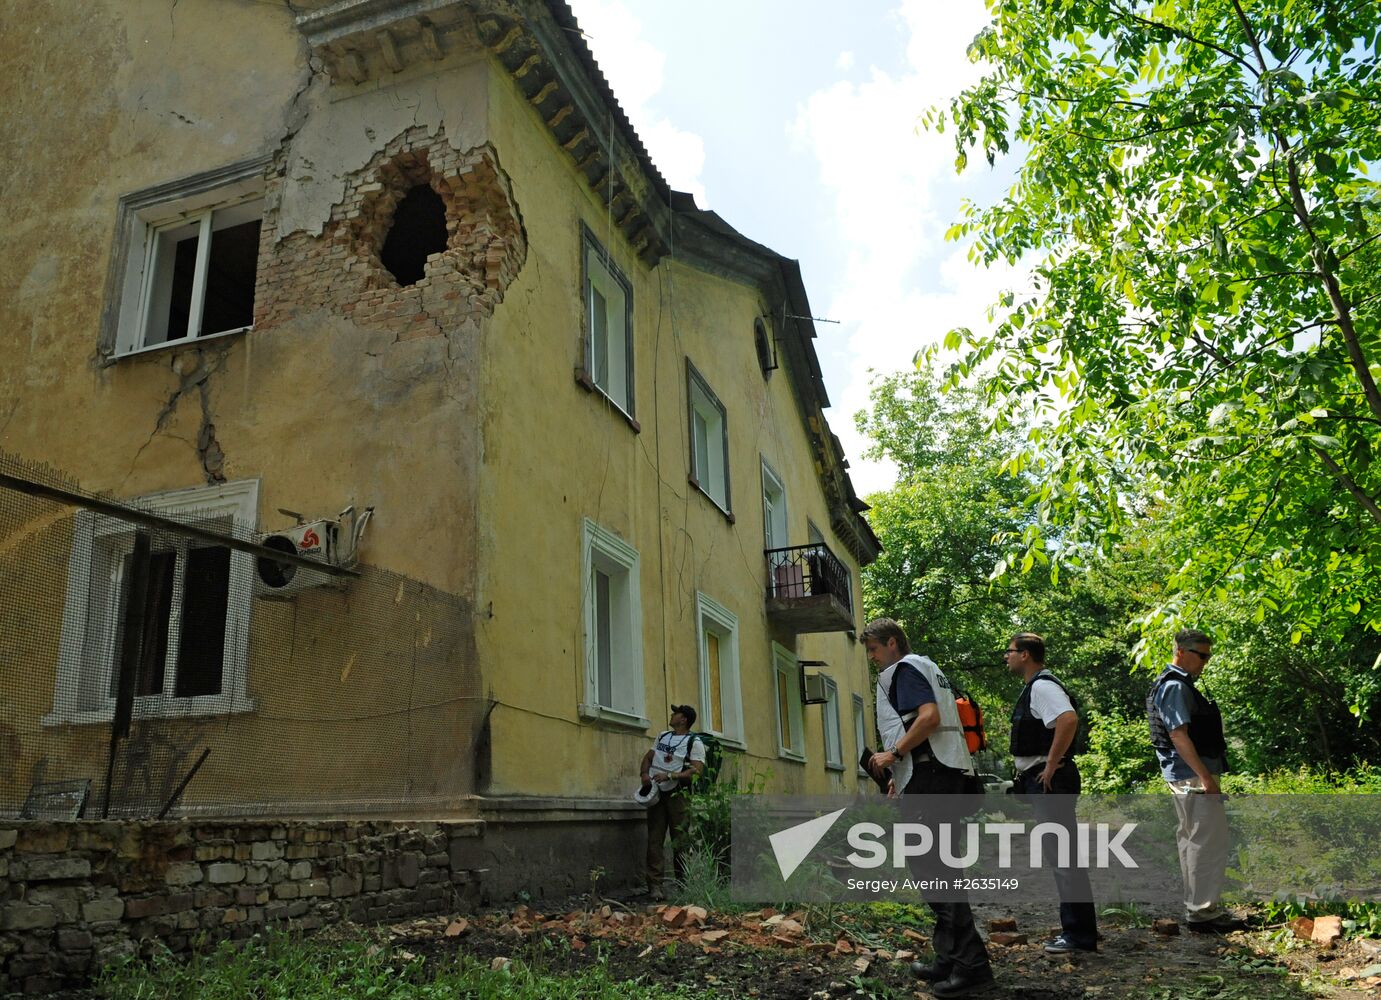 OSCE representatives arrive on site of shelling in Donetsk